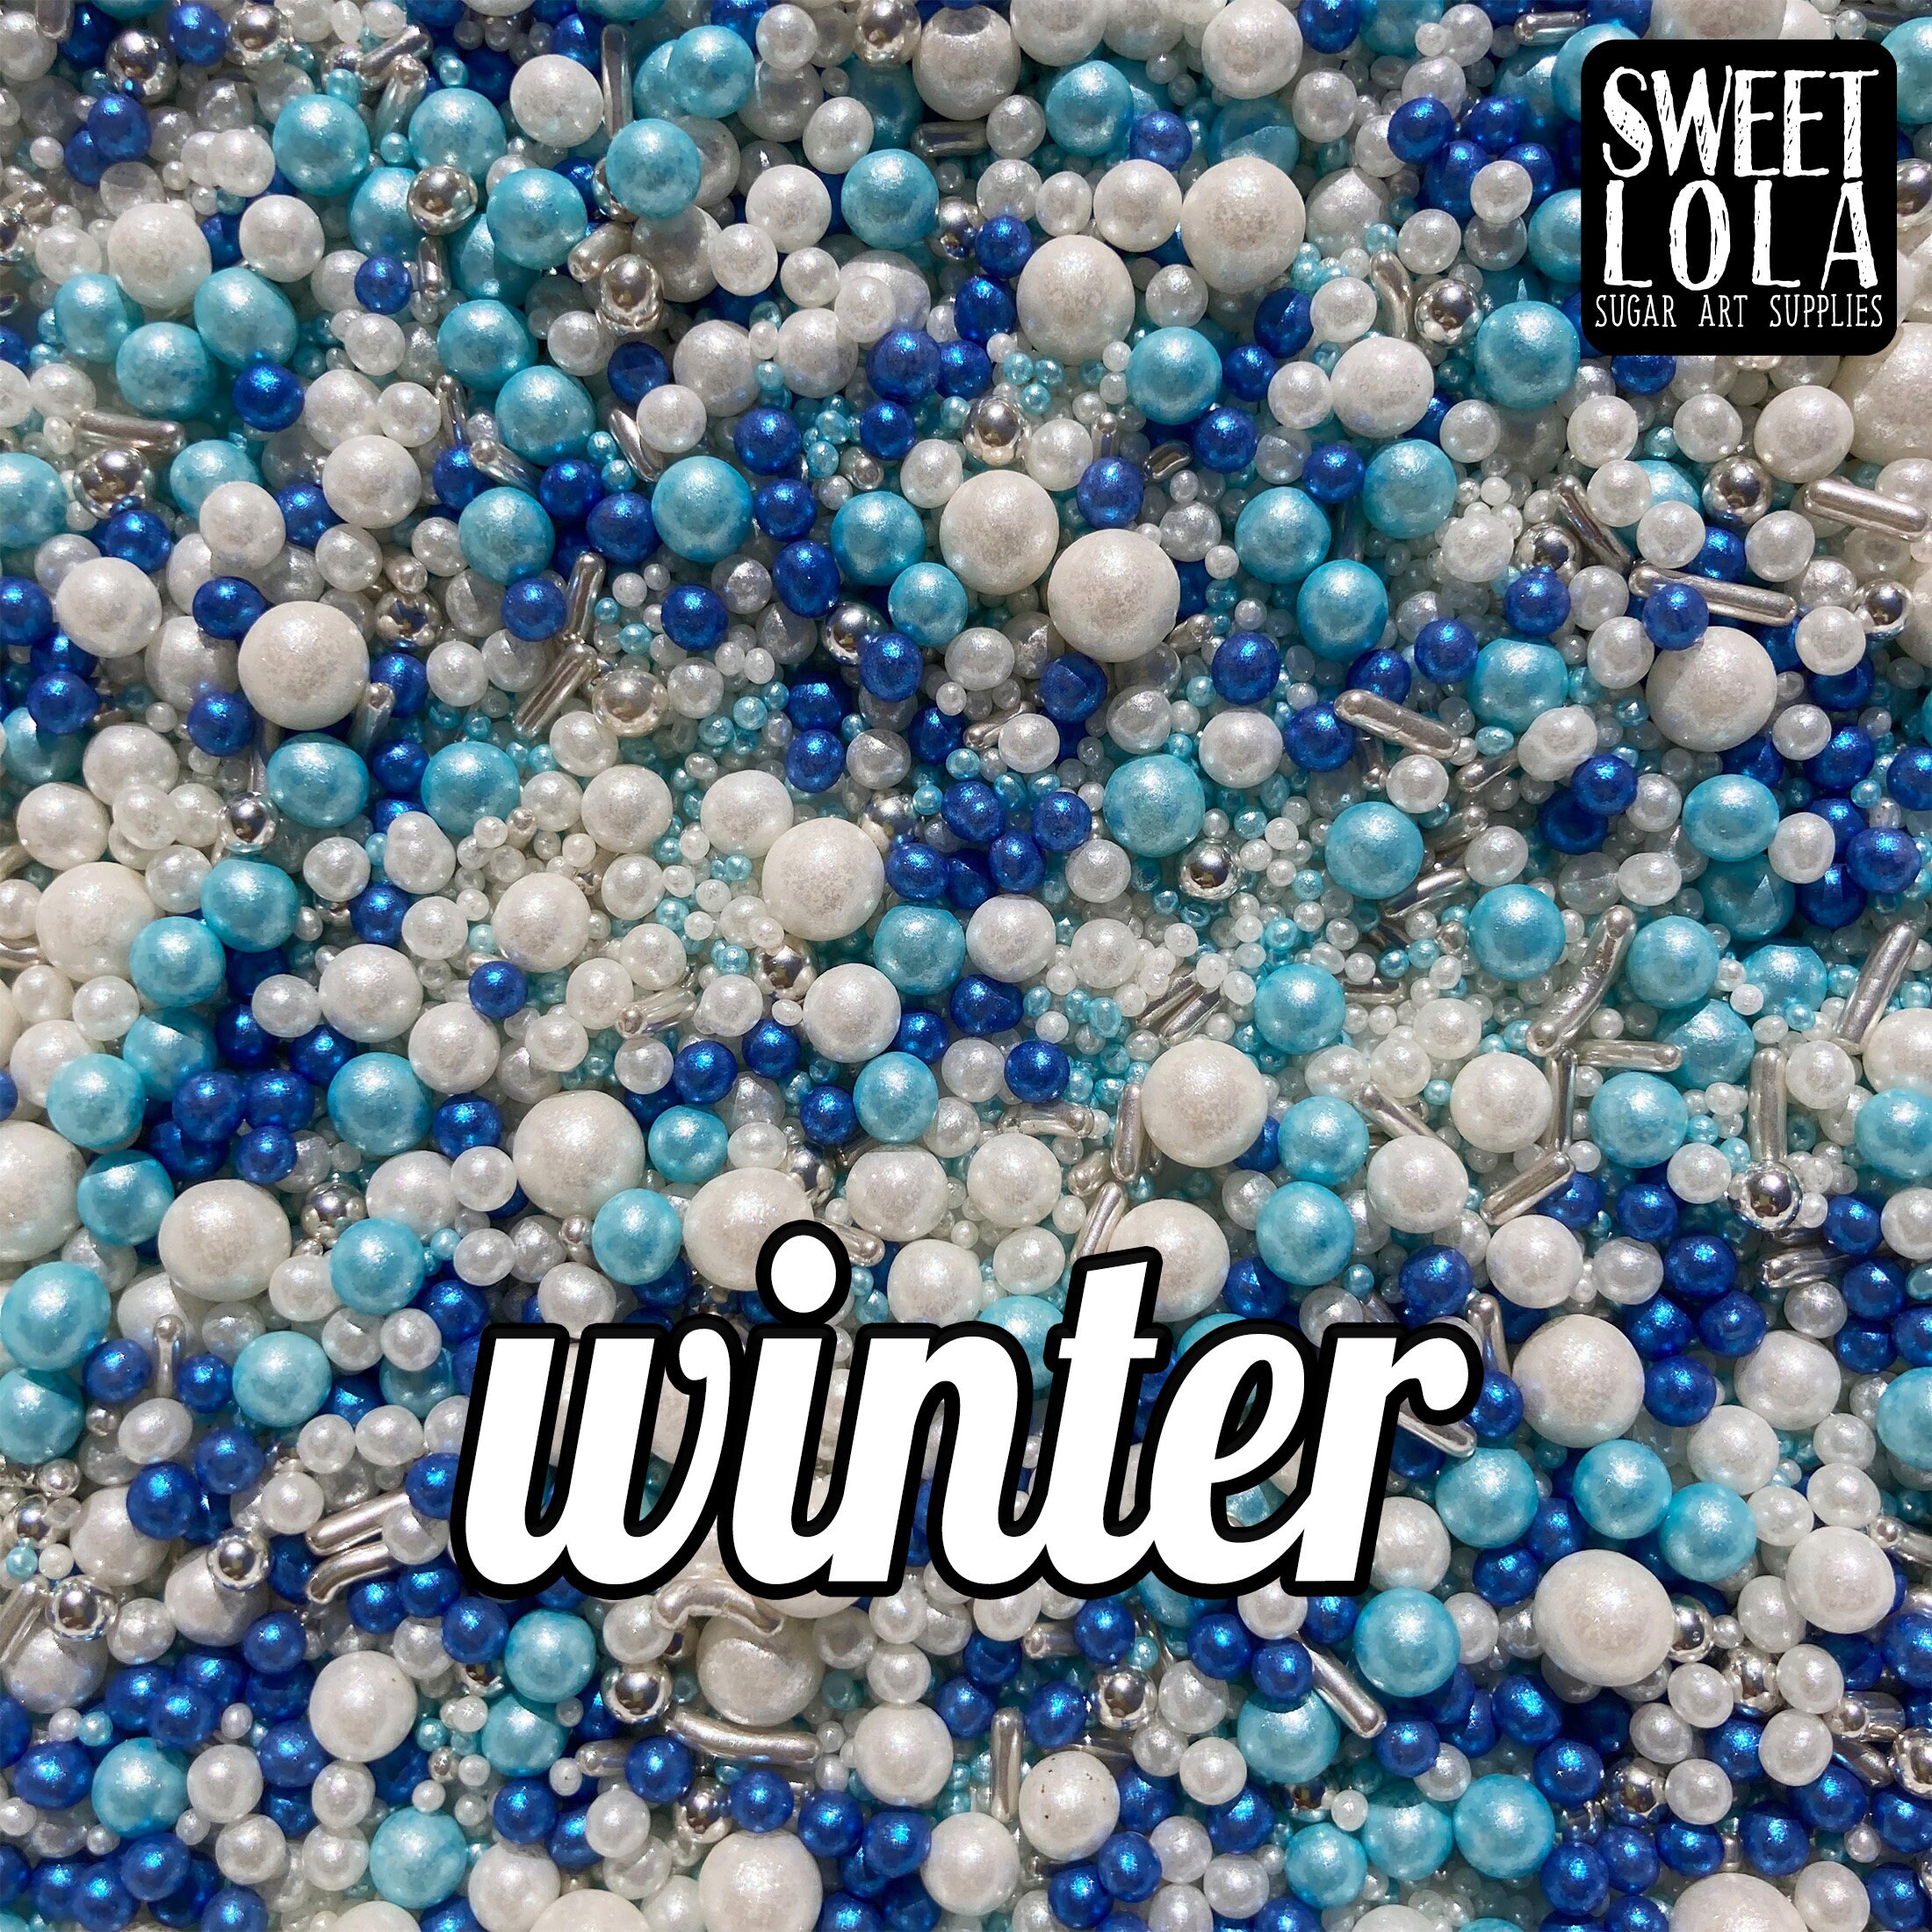 Snow & Ice, Winter Sprinkles, Snowflake Sprinkles, Metallic Sprinkles, Cake  Decorations 